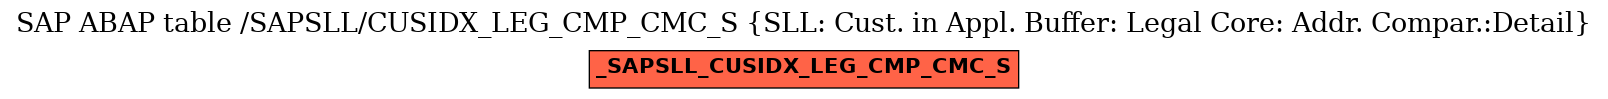 E-R Diagram for table /SAPSLL/CUSIDX_LEG_CMP_CMC_S (SLL: Cust. in Appl. Buffer: Legal Core: Addr. Compar.:Detail)